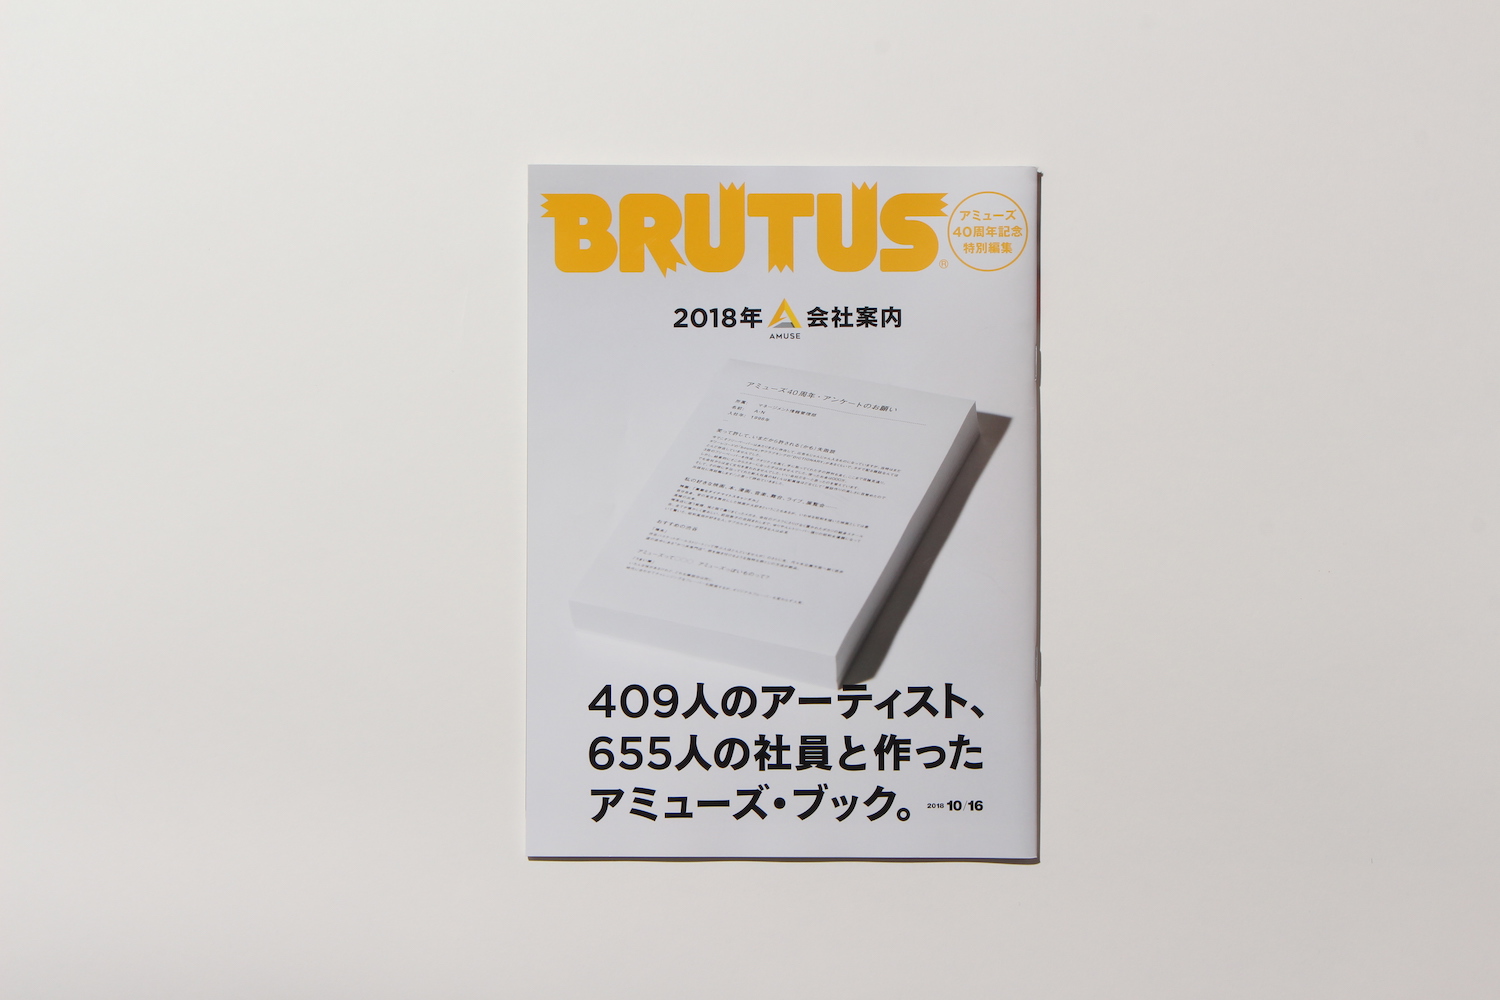 Brutus Amuse Works Edit Life Co Ltd